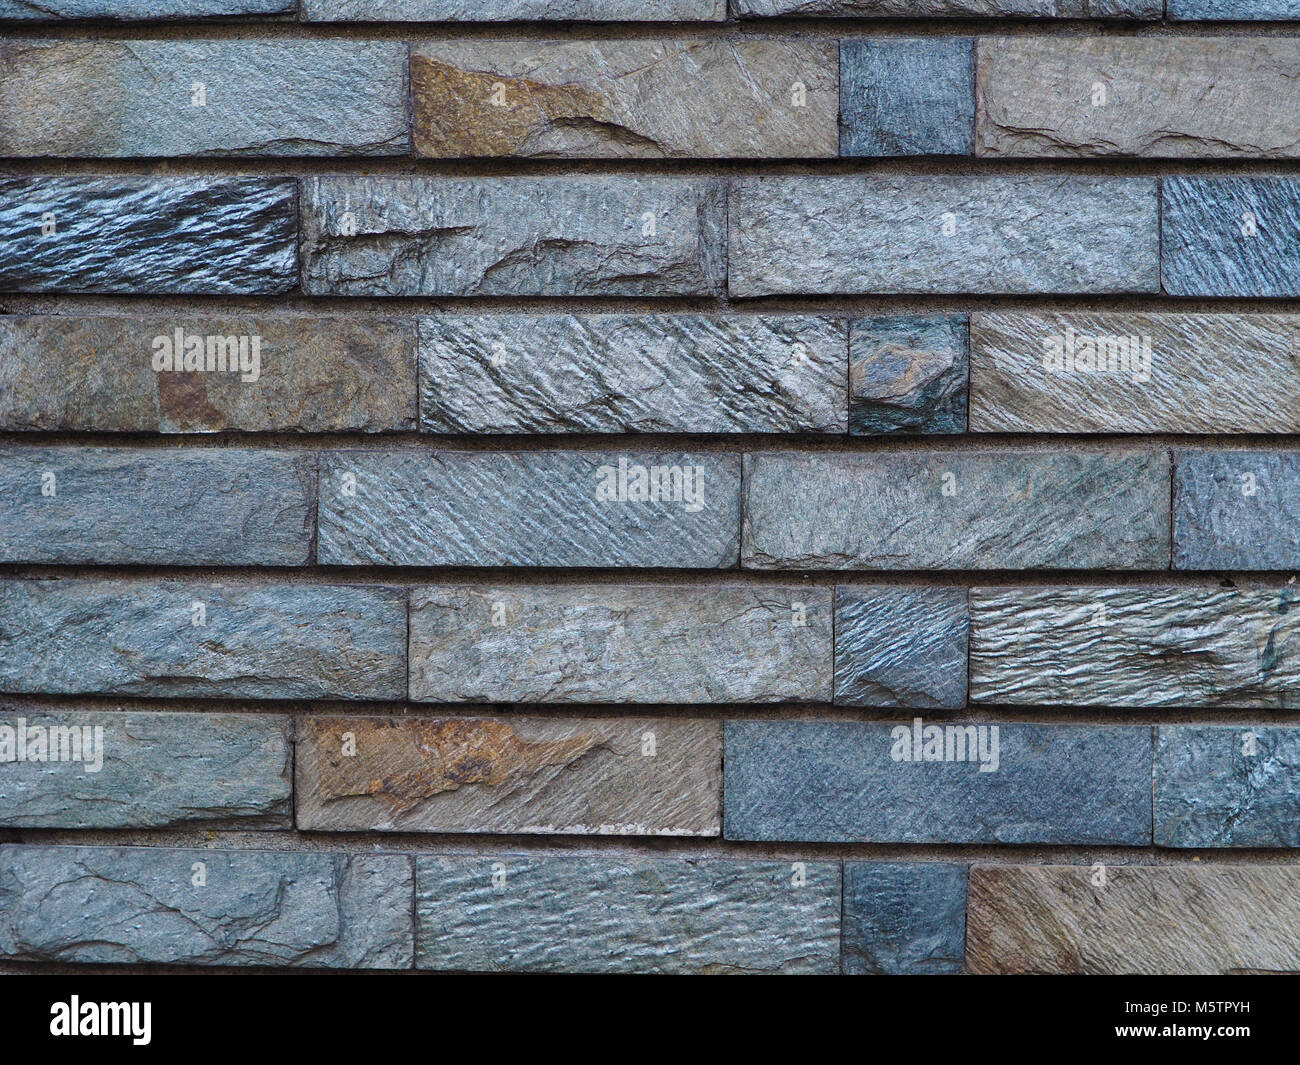 Slate Tile Brick Work Background Photograph Rough Cut Textured Slate Stone Brick Shaped Tiles Natural Blue